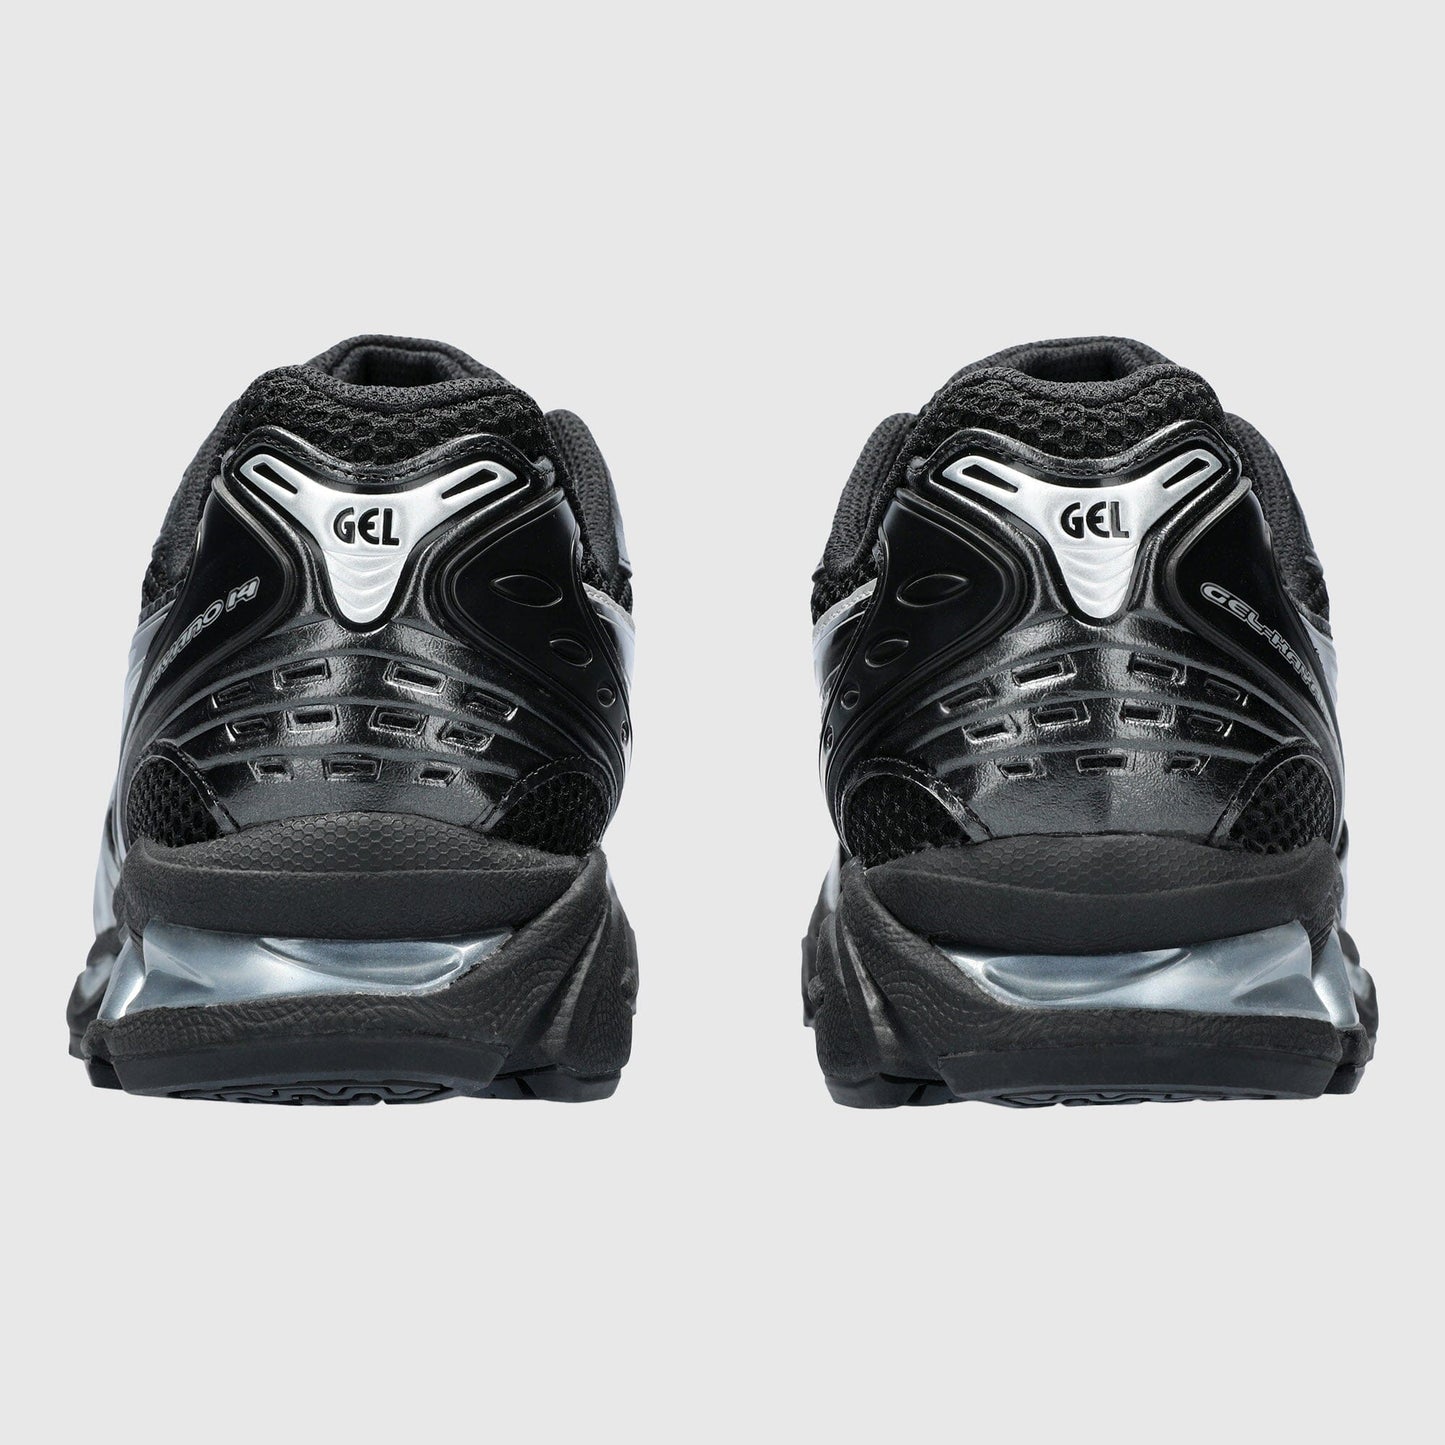 Asics Gel-Kayano 14 - Black / Pure Silver Sneakers Asics 